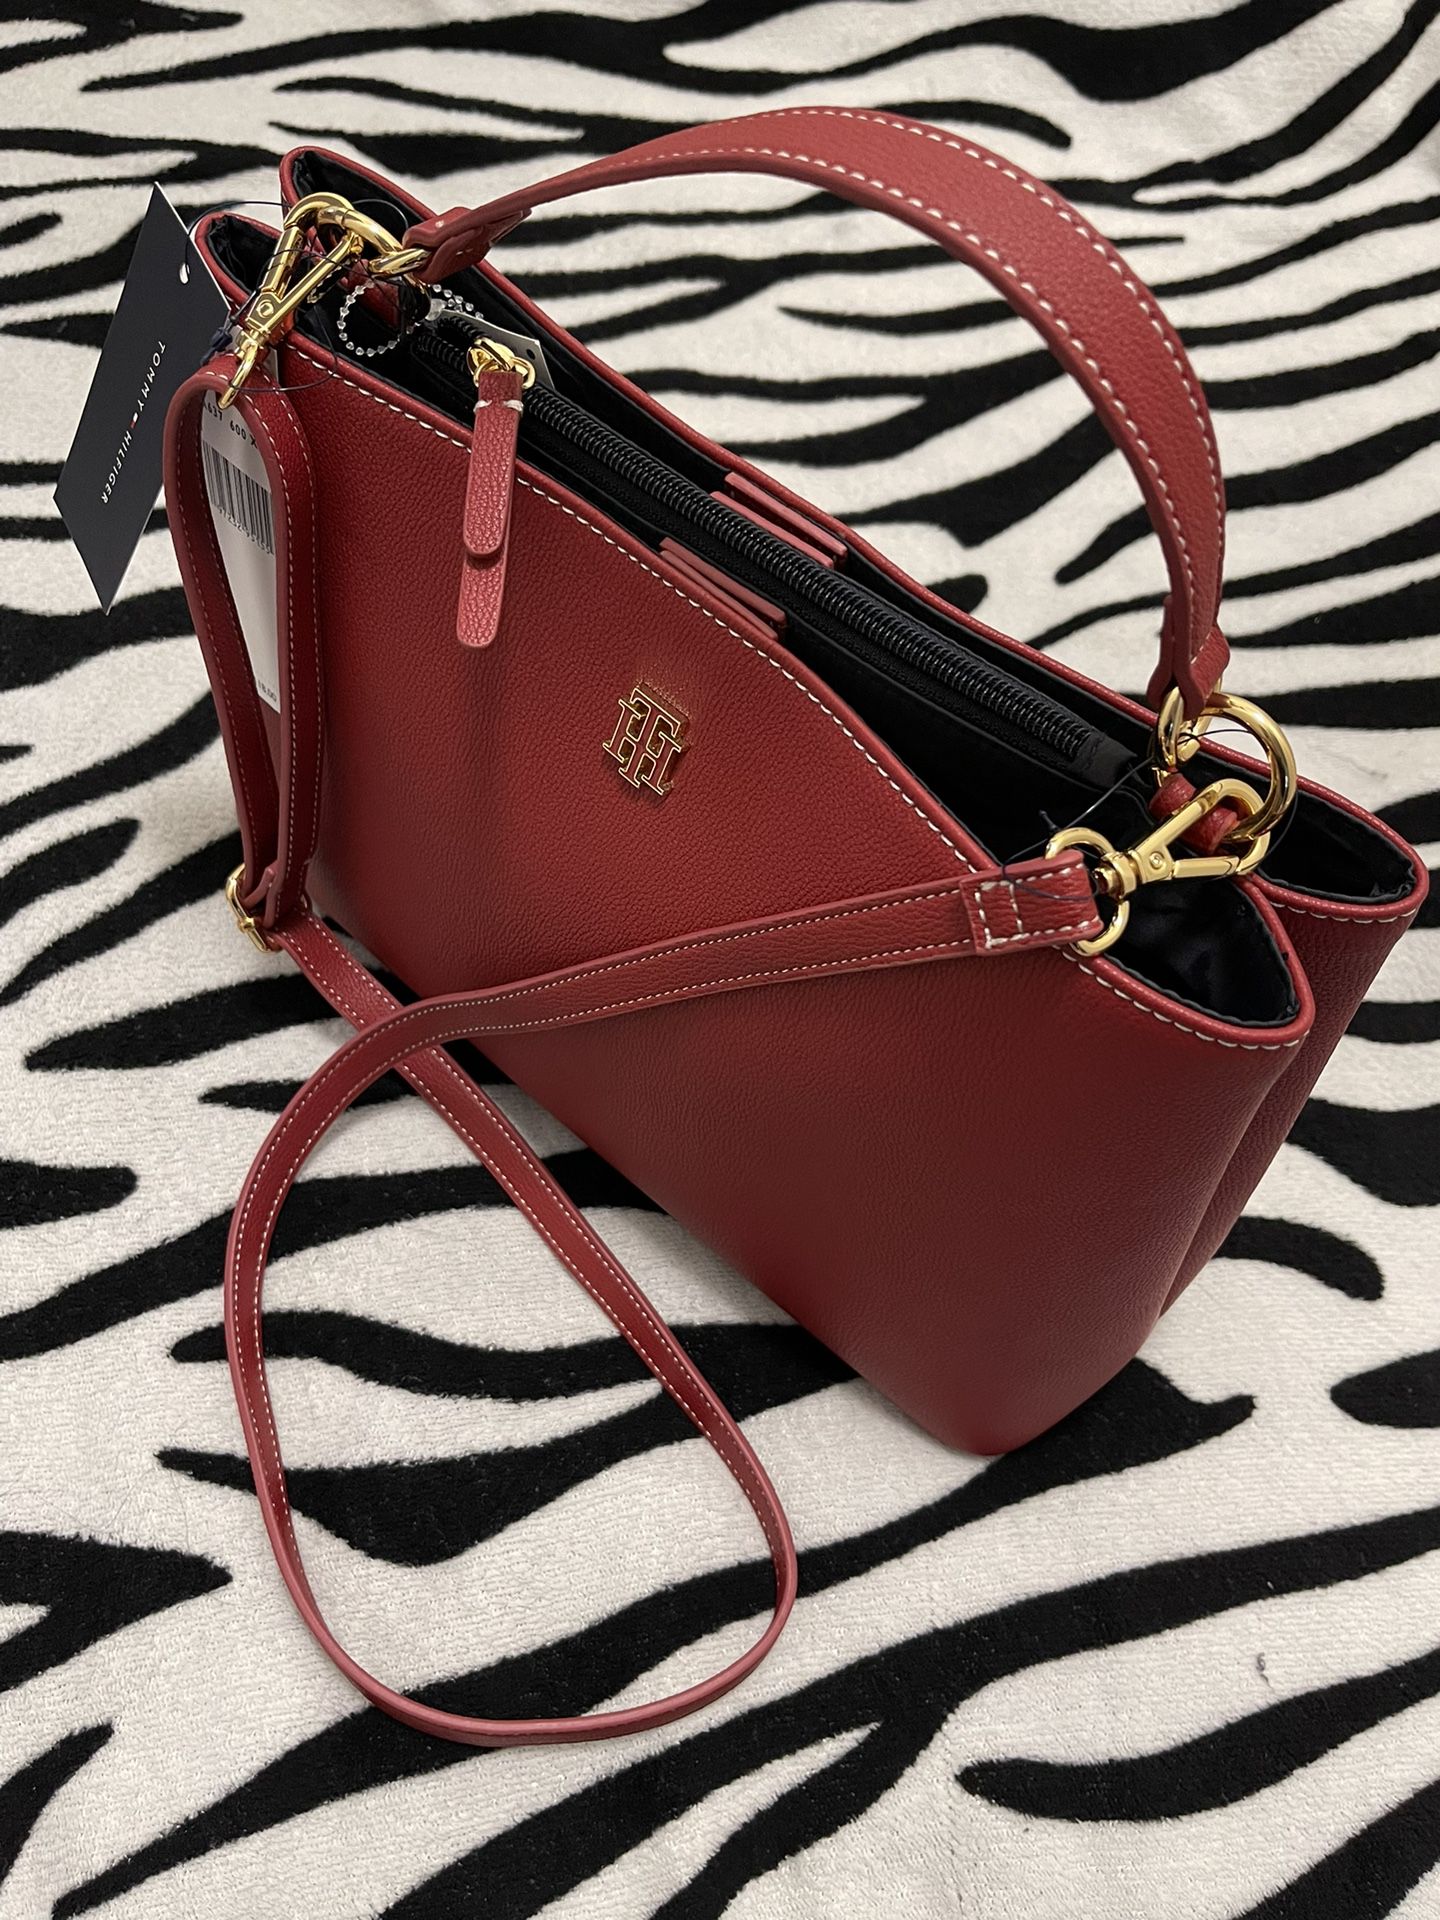 New Handbag For Women (Tommy Hilfiger )